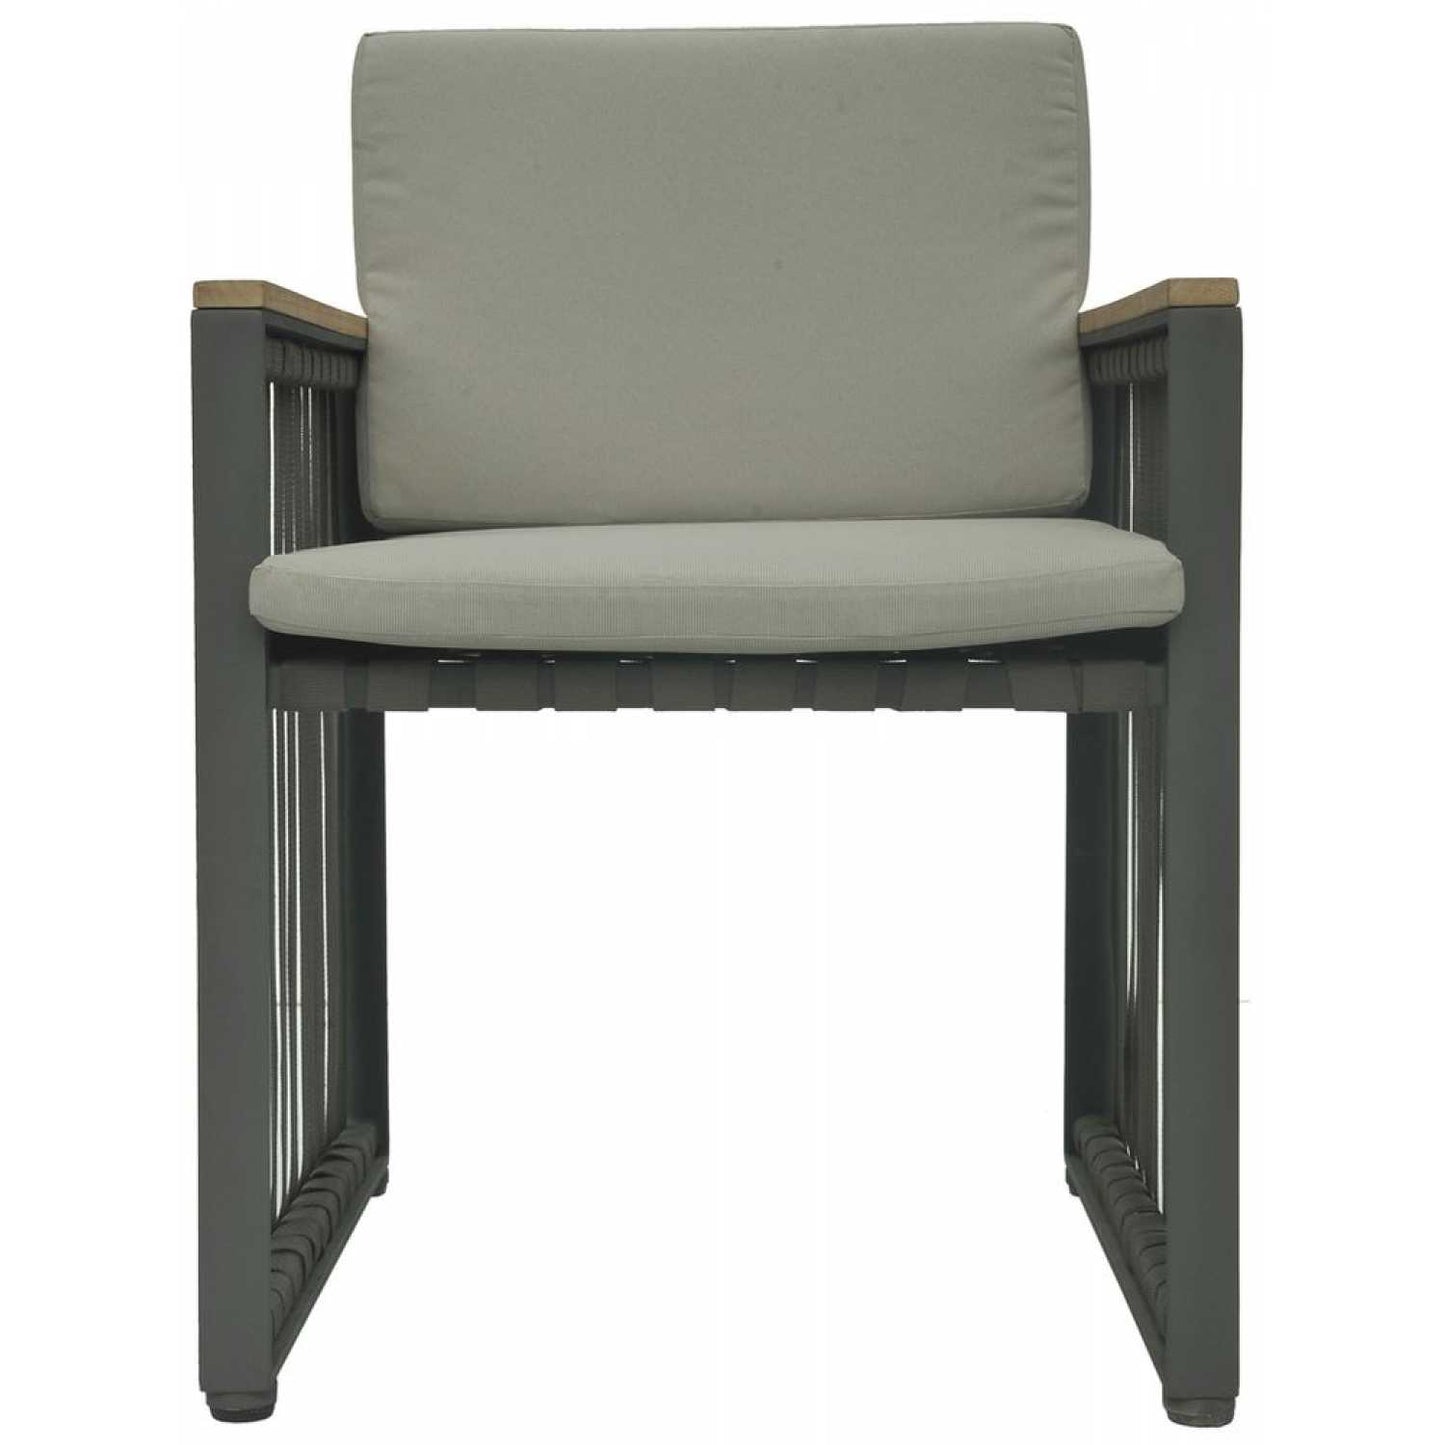 Horizon Dining Chair - PadioLiving - Horizon Dining Chair - Outdoor Dining Chair - PadioLiving